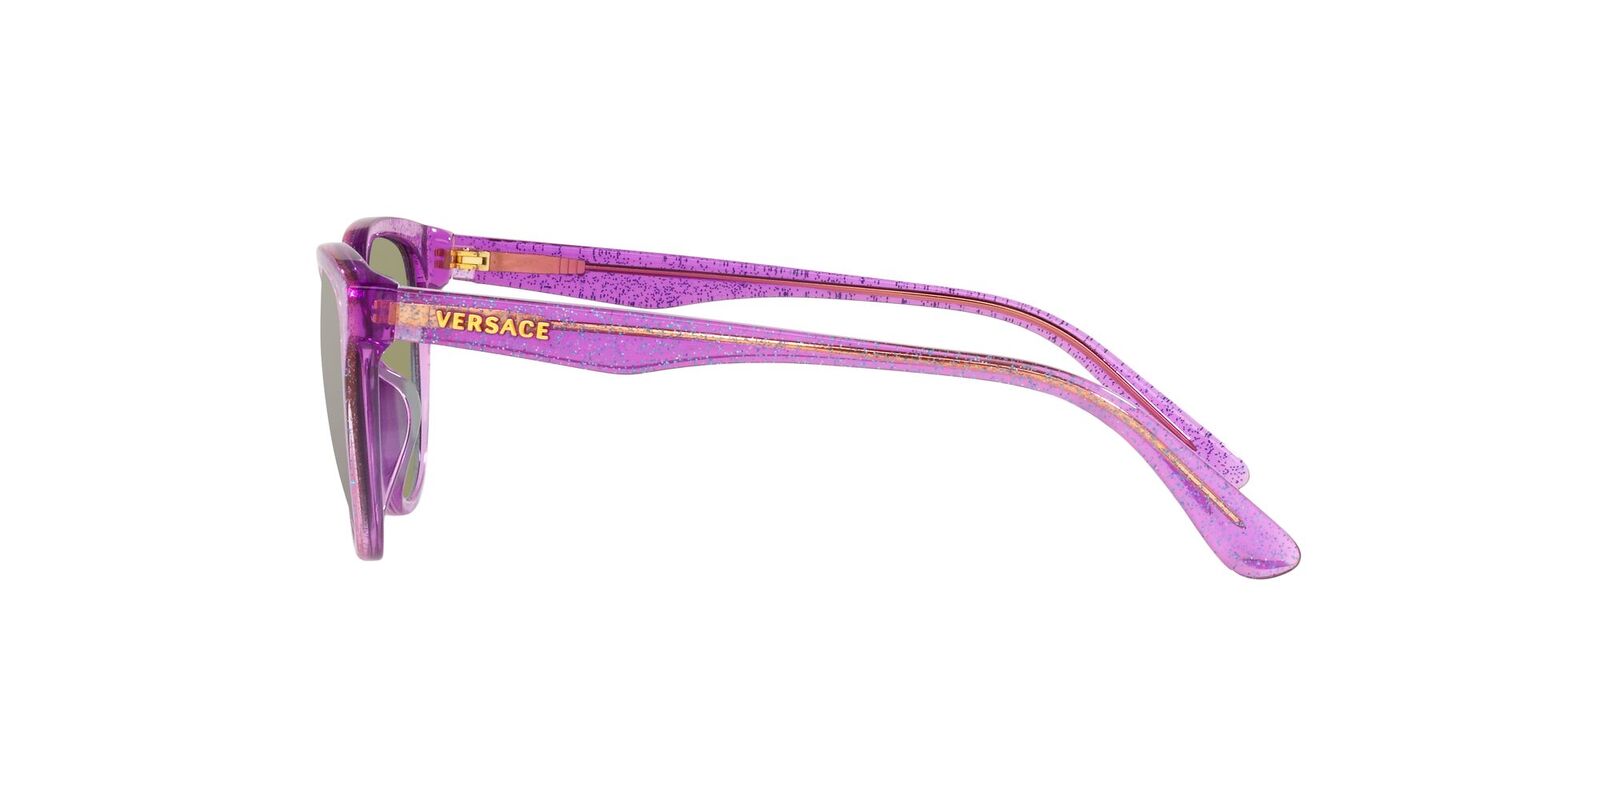 Versace 7-10 YEARS UNISEX - Sunglasses - transparent/violet/lilac -  Zalando.co.uk